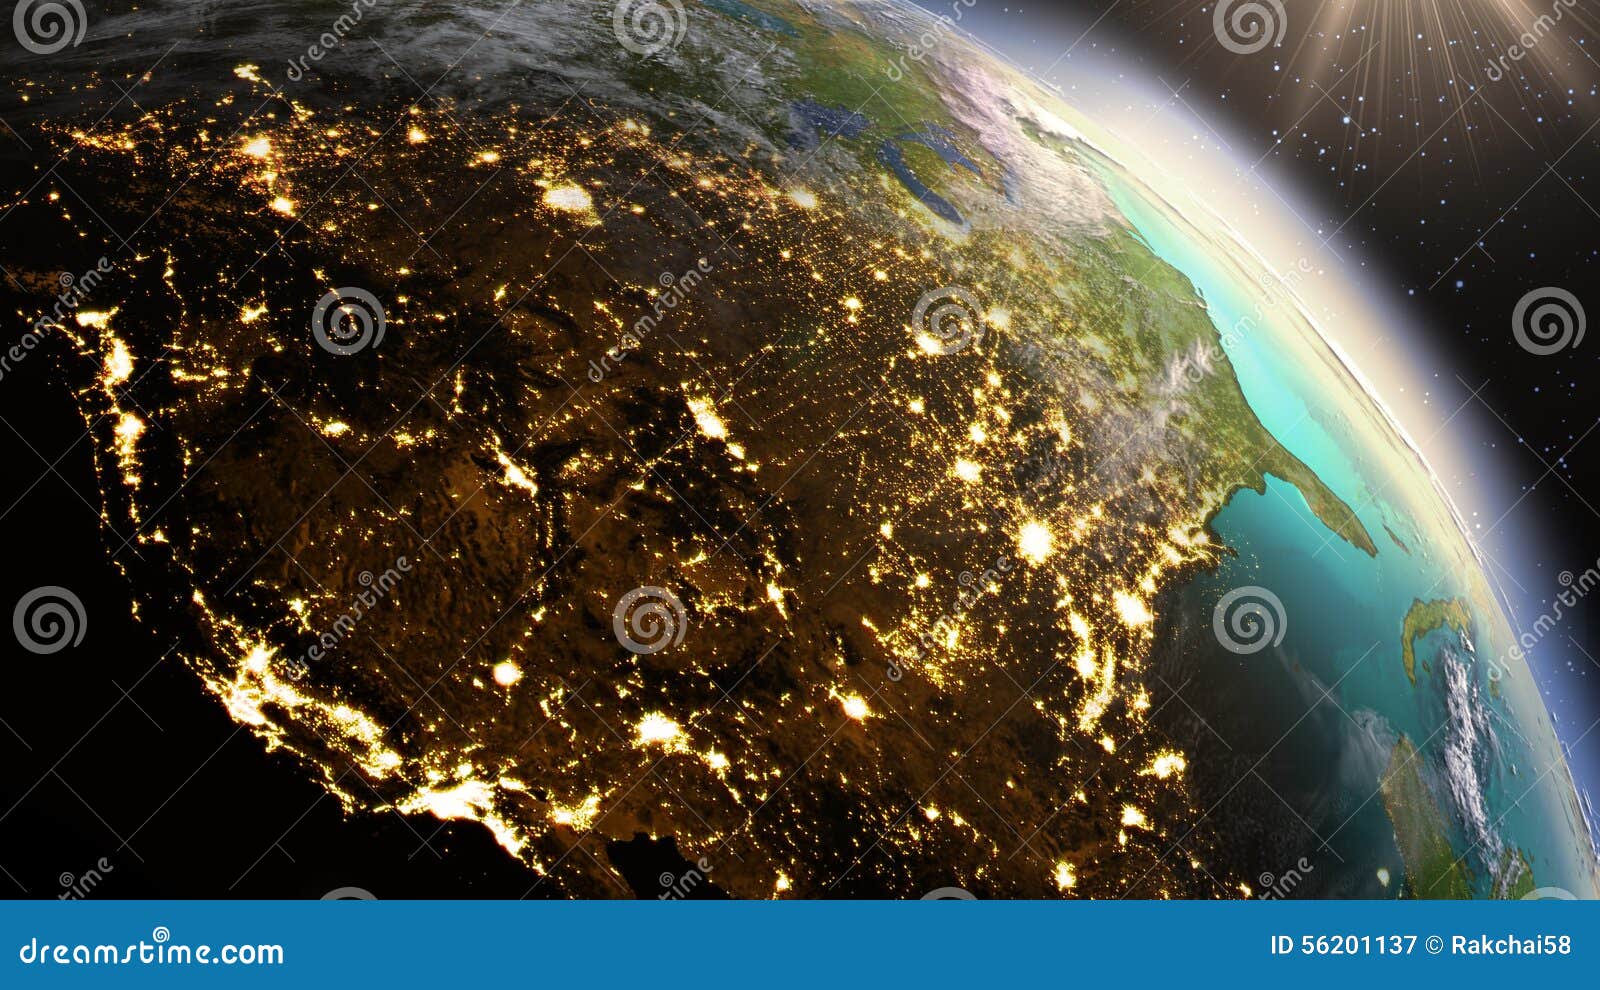 planet earth north america zone using satellite imagery nasa